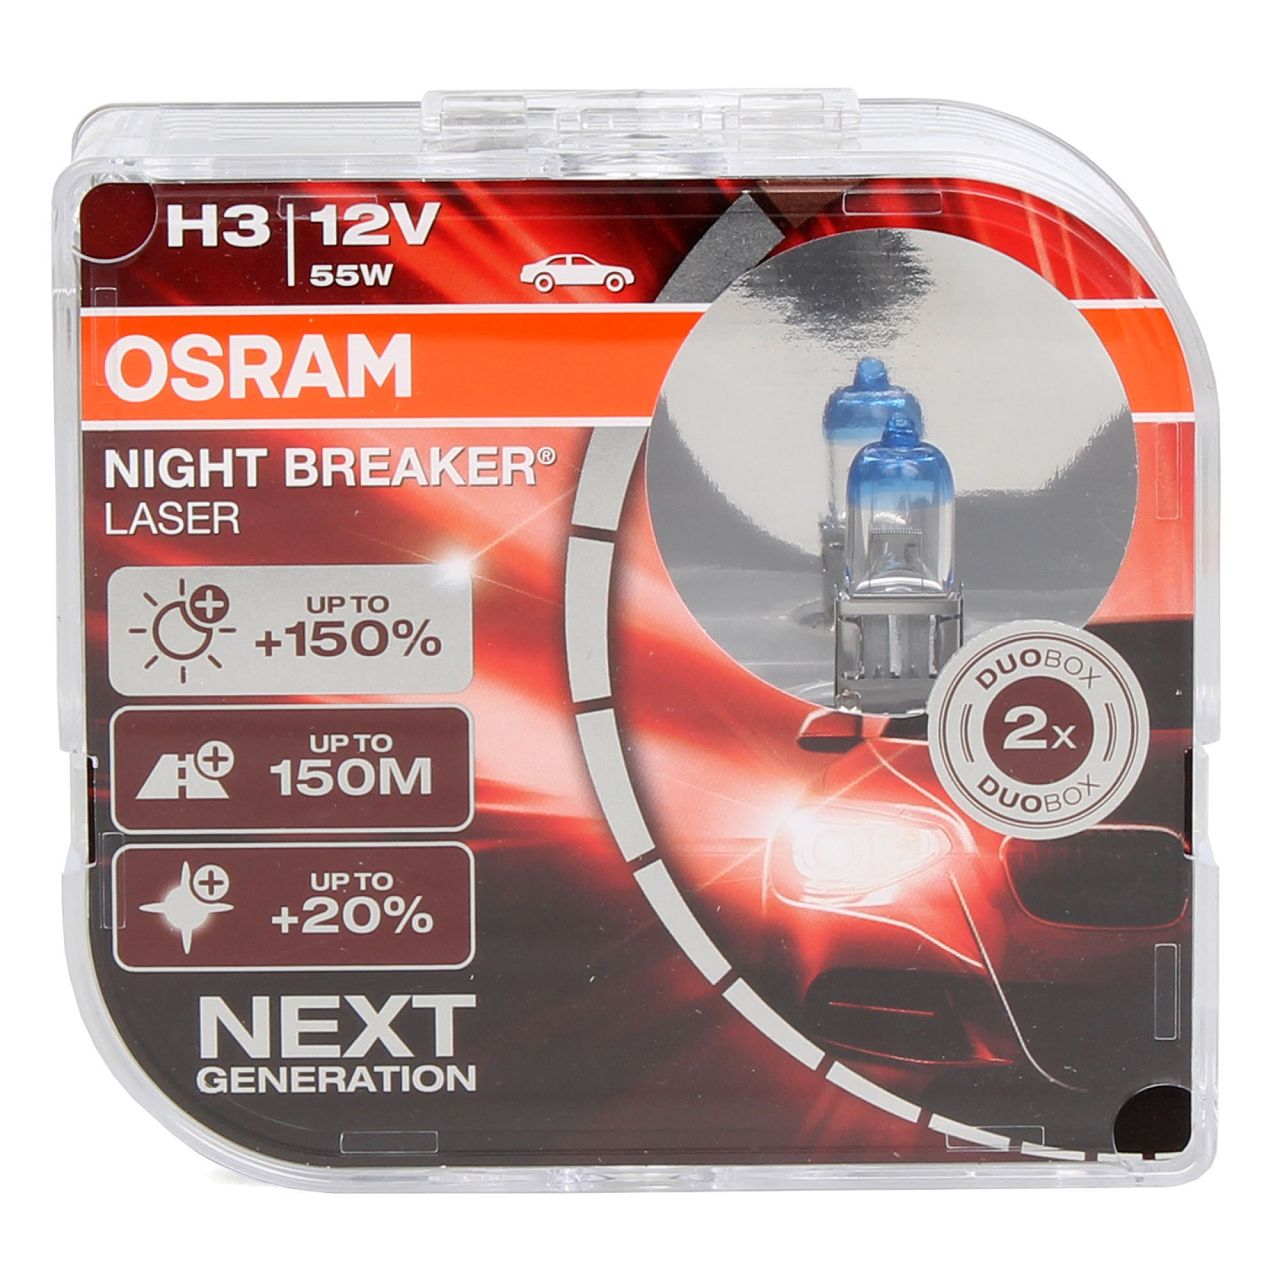 2x OSRAM Glühlampe H3 NIGHT BREAKER LASER 12V 55W PK22s next Generation +150%